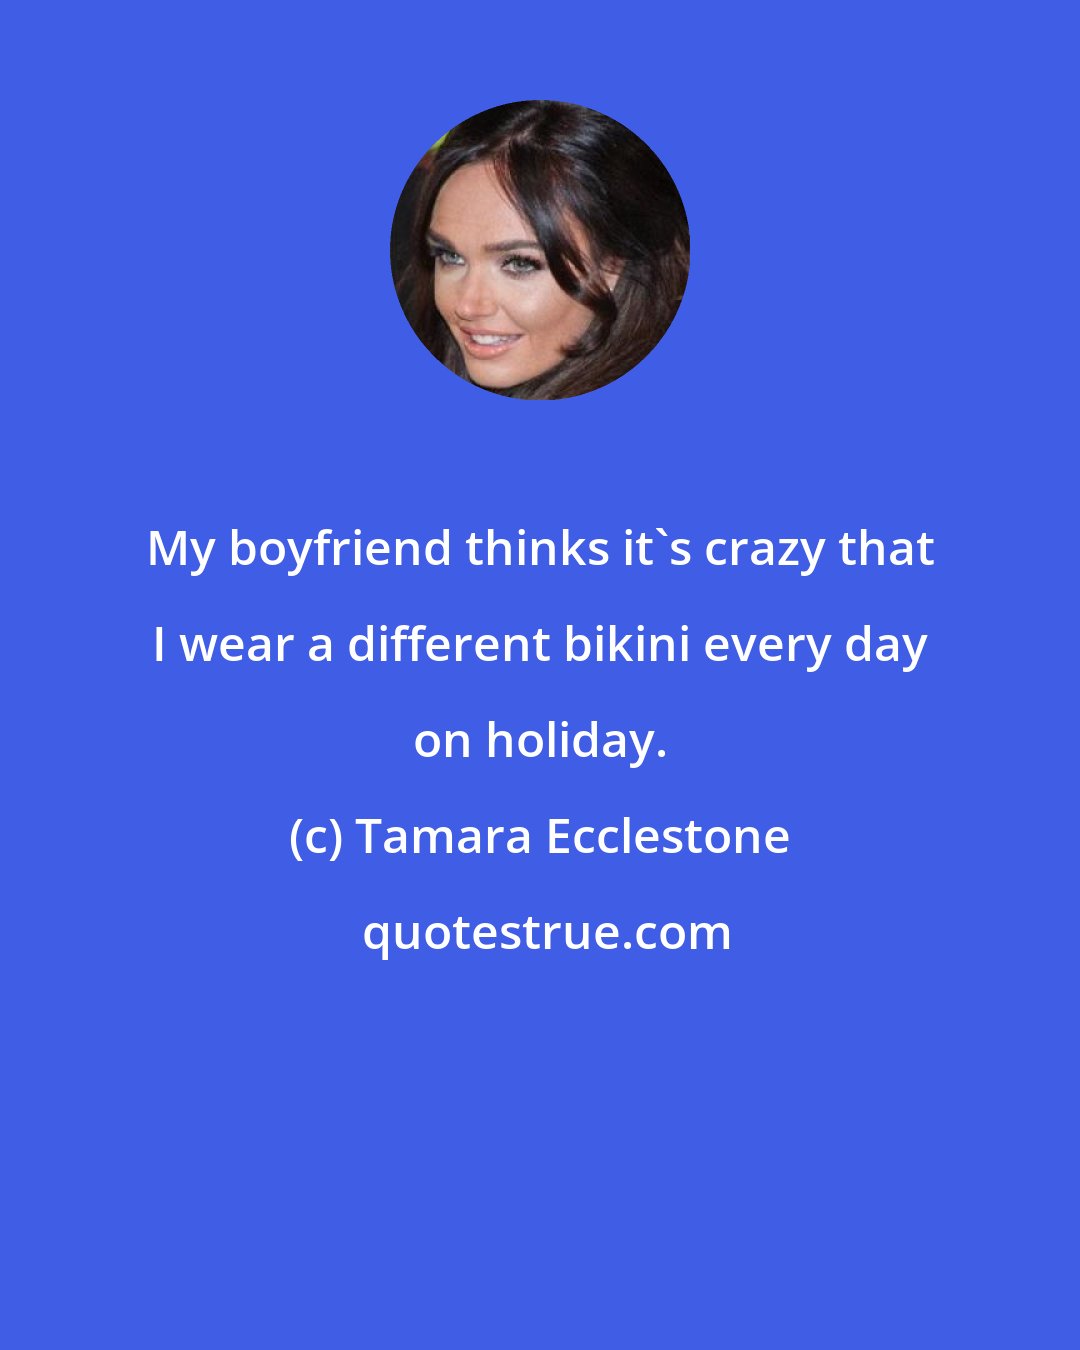 Tamara Ecclestone: My boyfriend thinks it's crazy that I wear a different bikini every day on holiday.